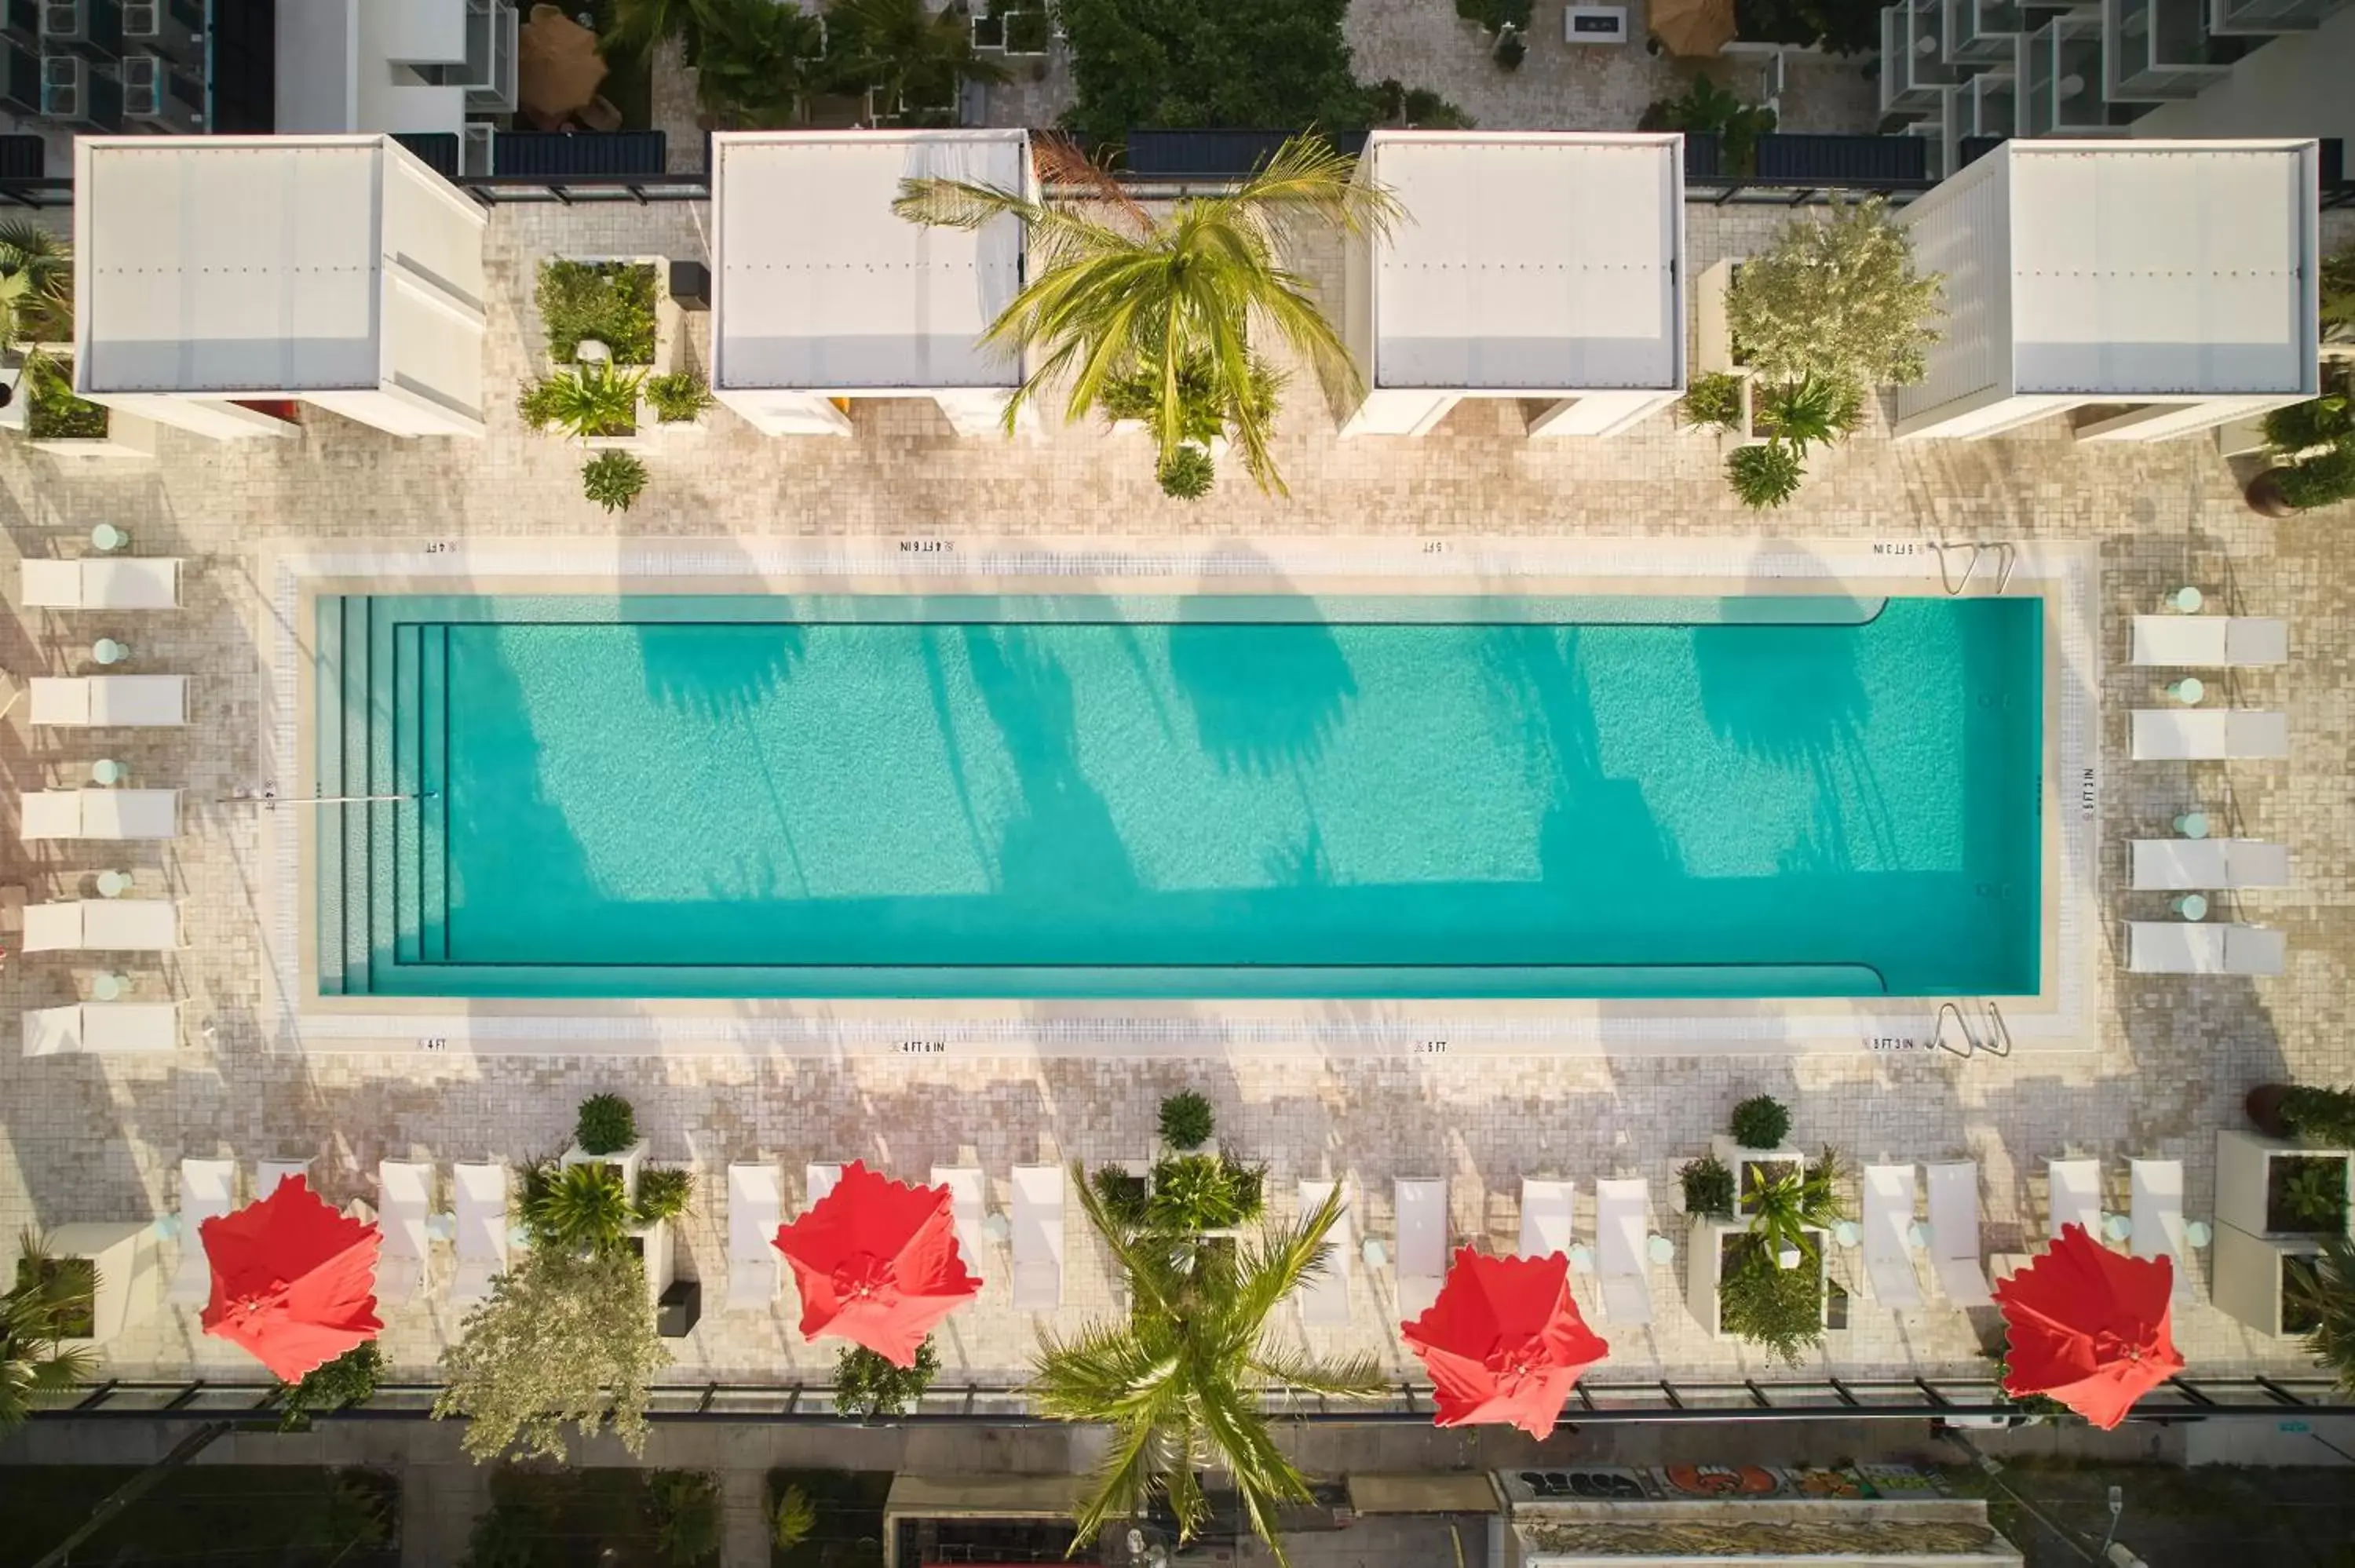 Bird's eye view, Pool View in Arlo Wynwood Miami